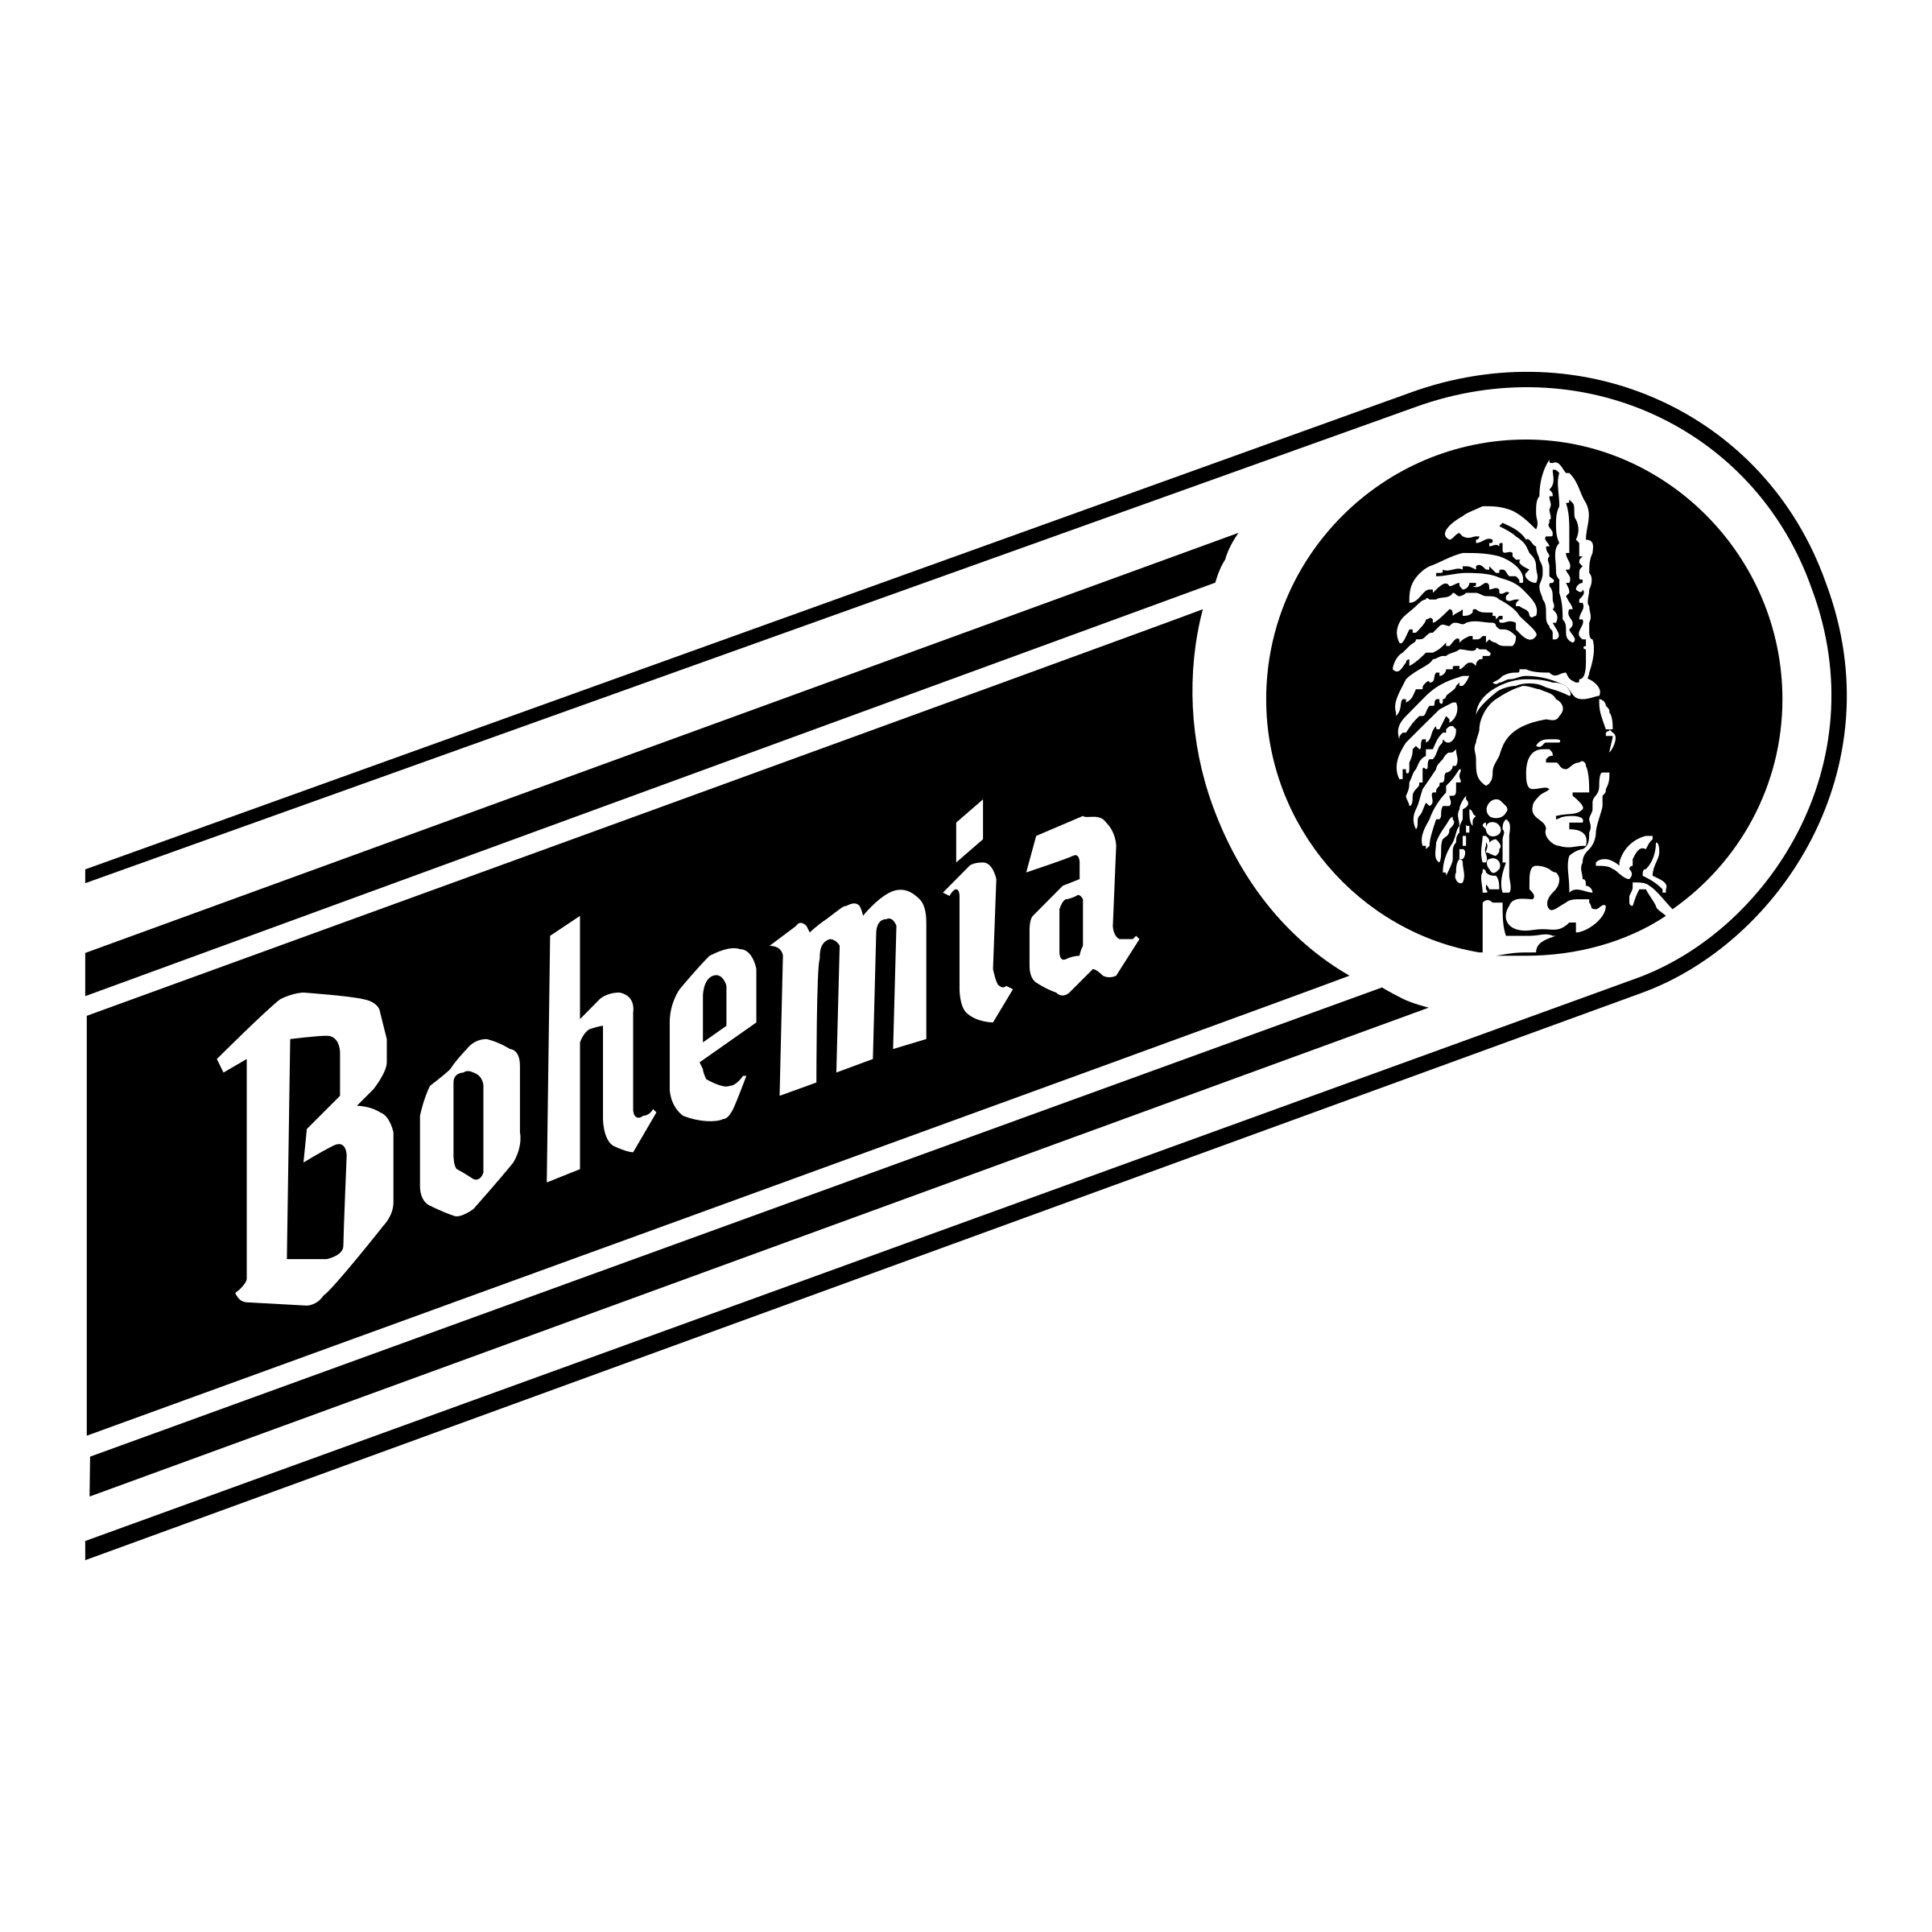 Bohemia Logo - Bohemia Beer Cerveza Logo PNG Transparent & SVG Vector - Freebie Supply